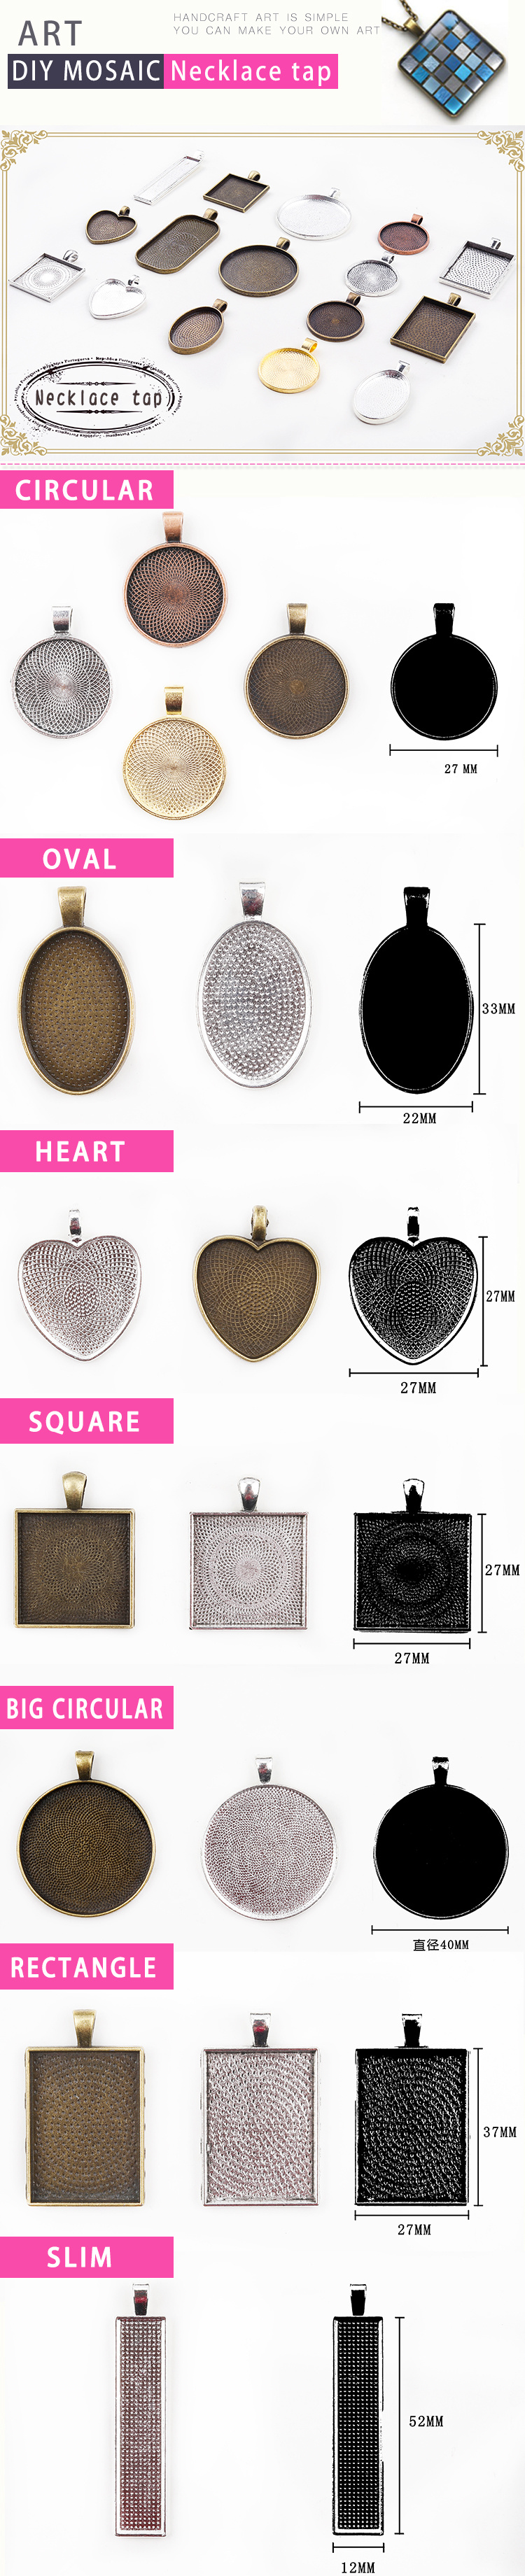 Alloy Jewelry Pendant Necklace Pendant Blastoderm DIY Mosaic Keychain Jewelry Accessories Handmade Creative Production